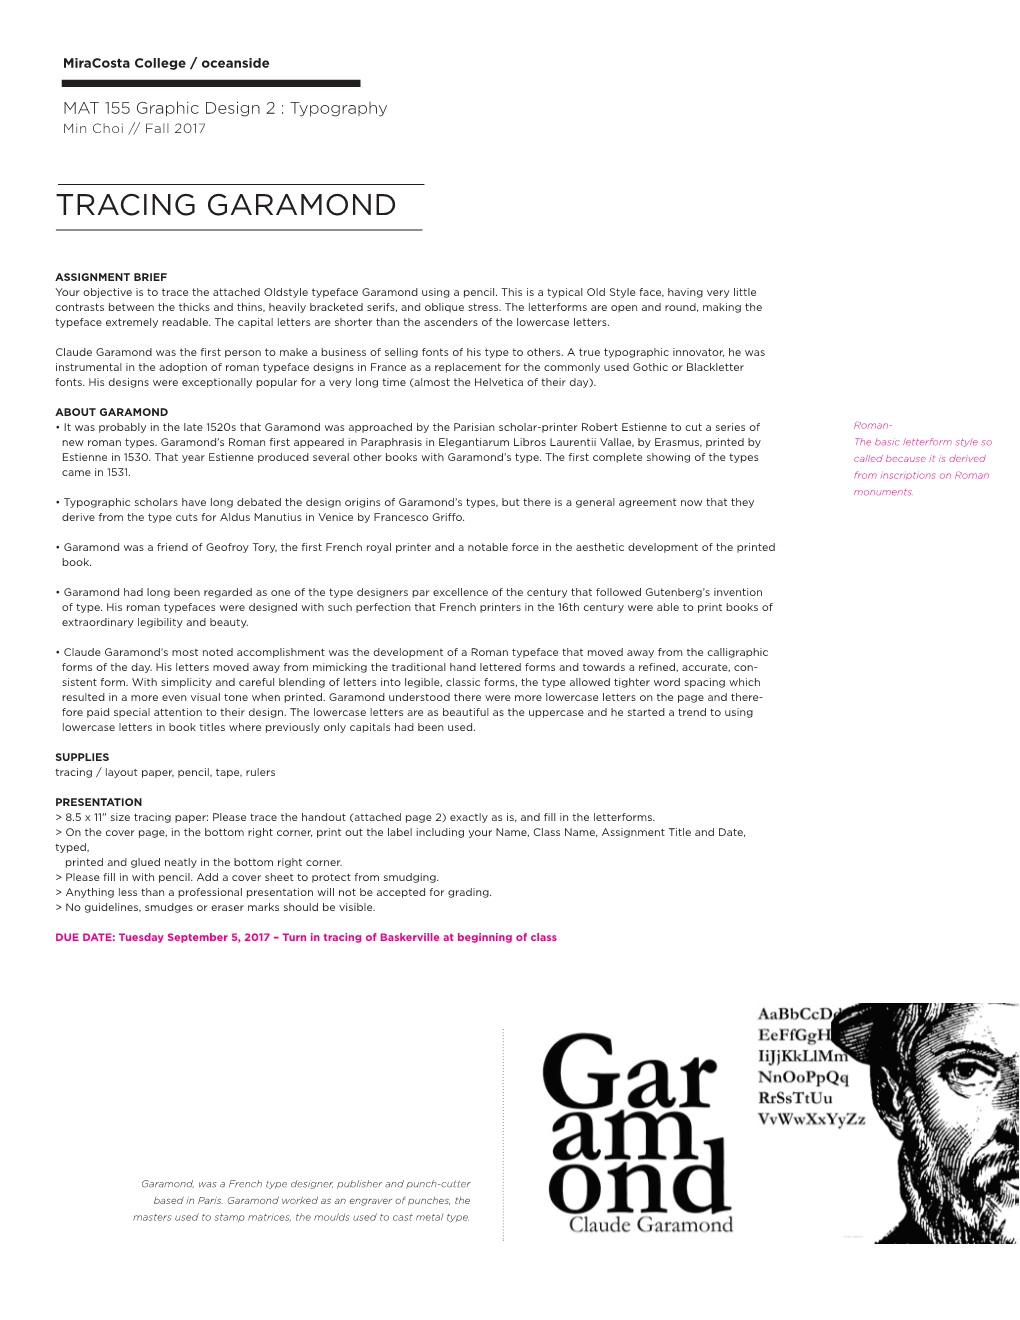 Tracing Garamond